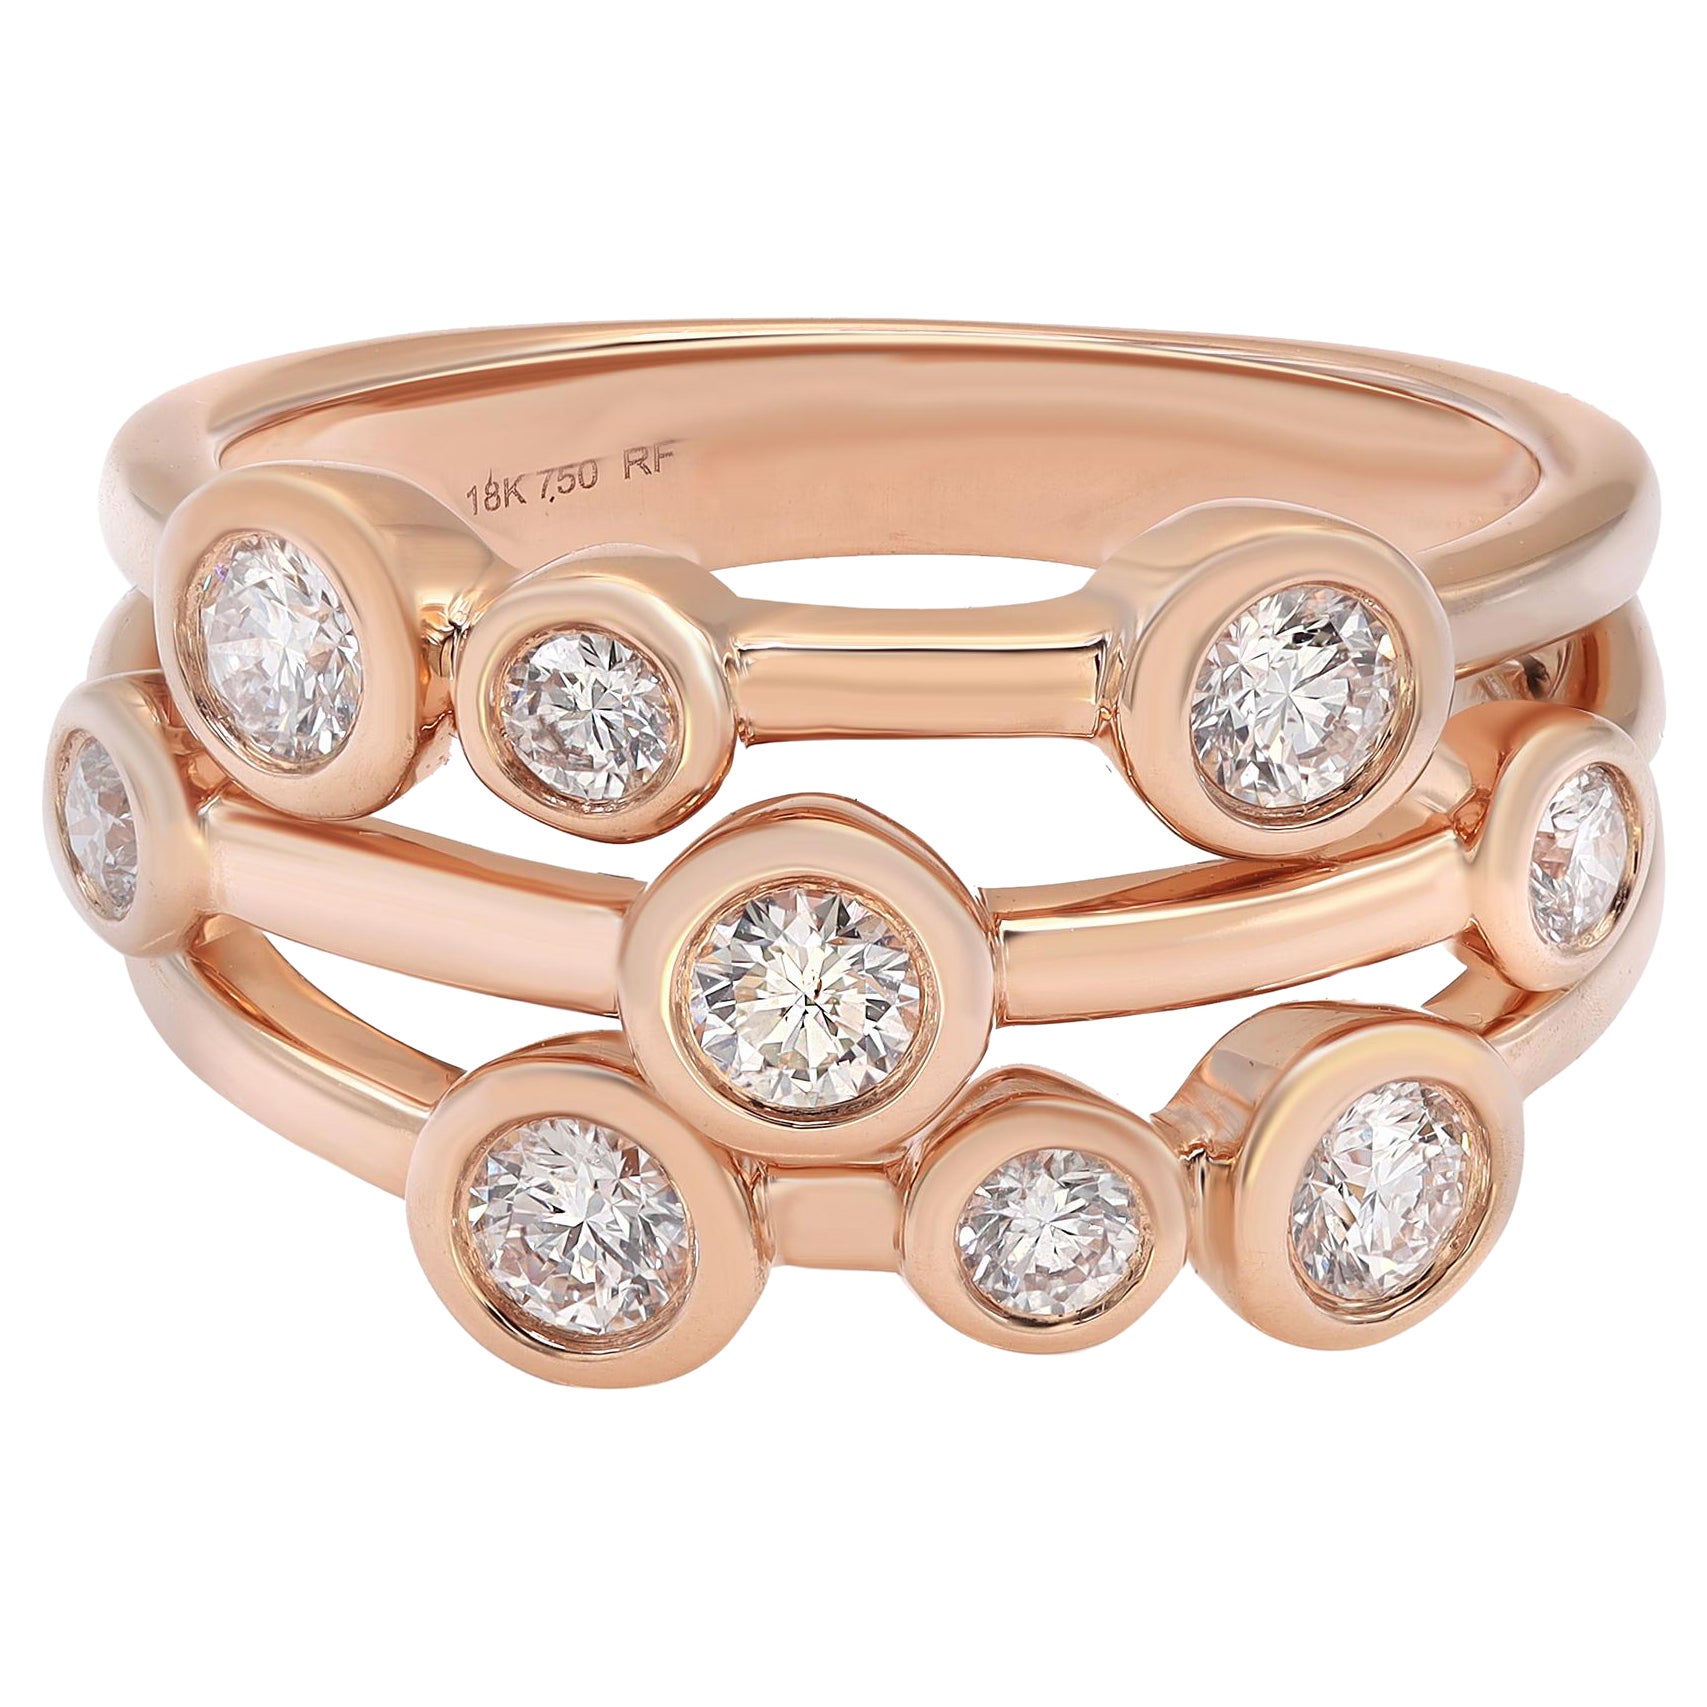 Rachel Koen Bezel Set Round Cut Diamond Fancy Ring 18k Rose Gold 0.68cttw For Sale